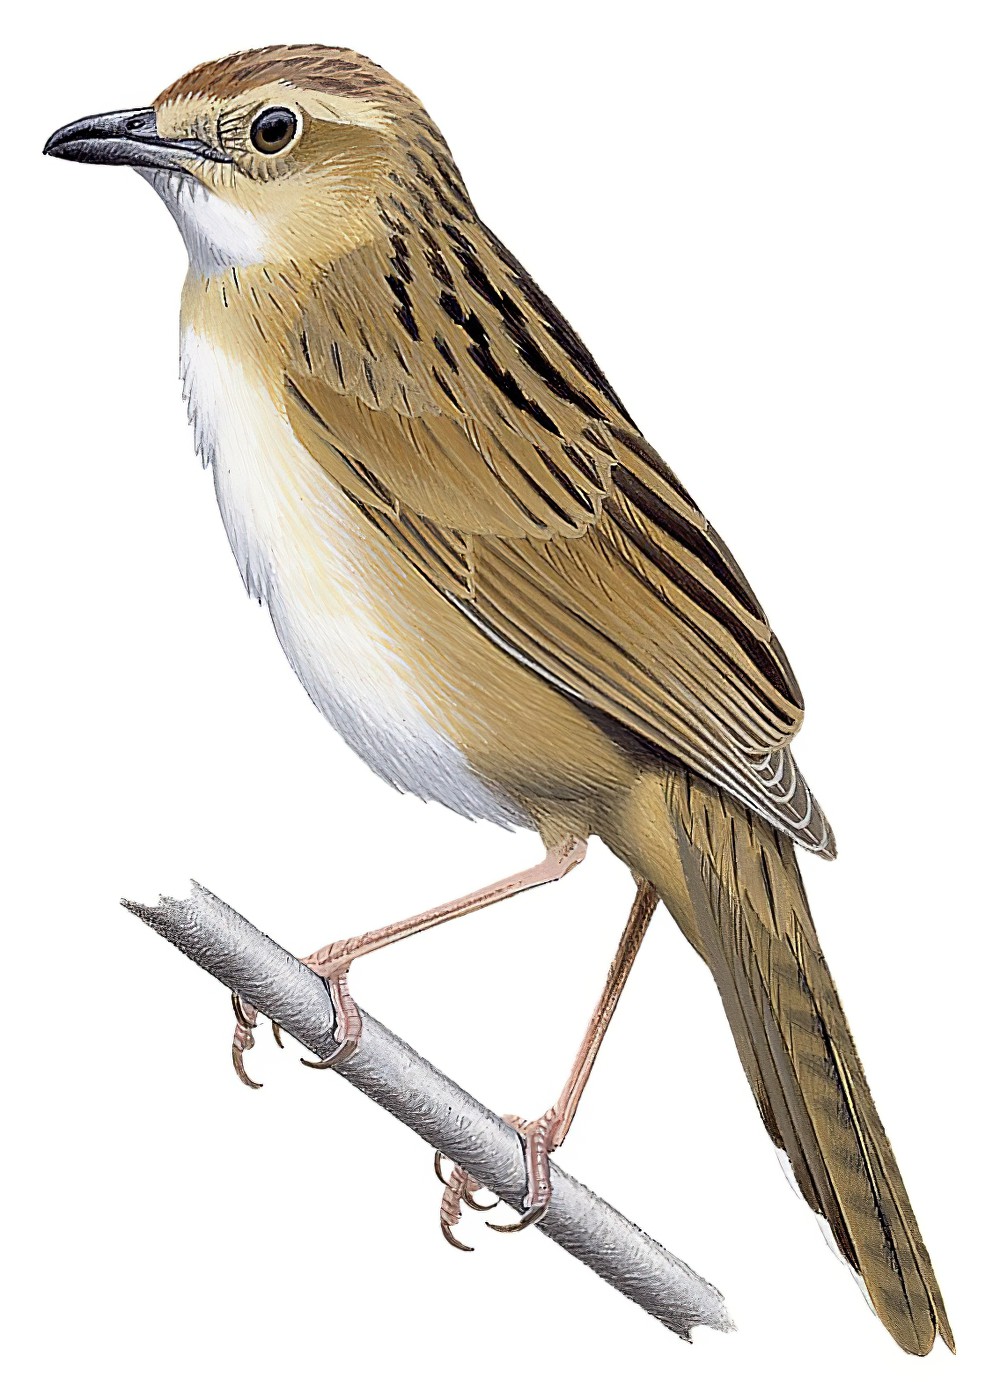 Bristled Grassbird / Chaetornis striata